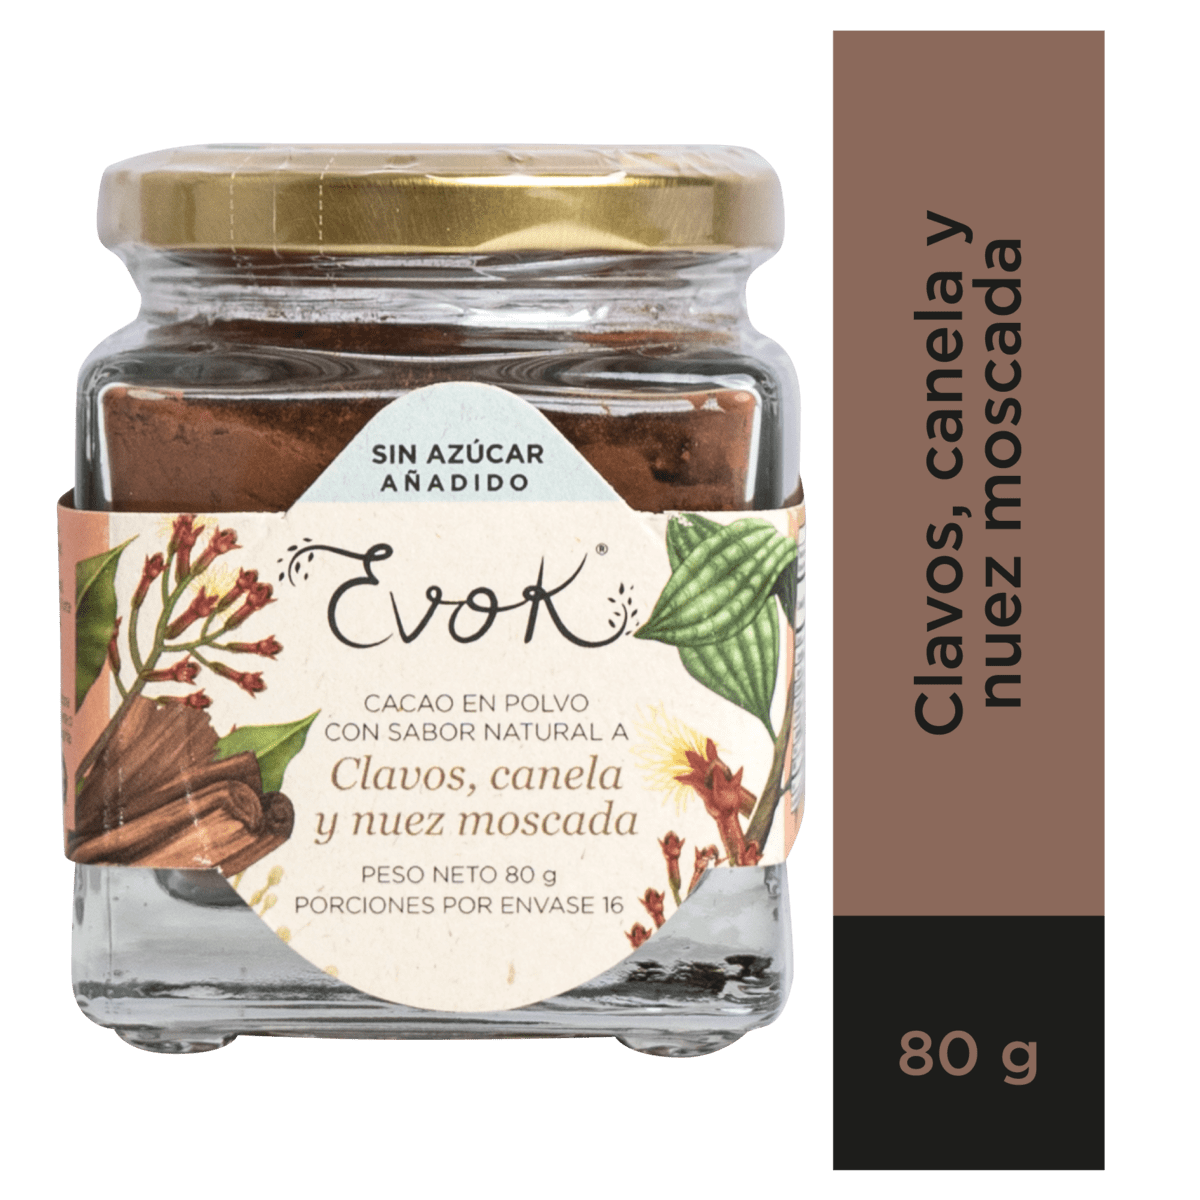 https://www.evok.com.co/wp-content/uploads/2022/08/Evok-cacao-en-polvo-canela-clavos-nuez-moscada-2.png